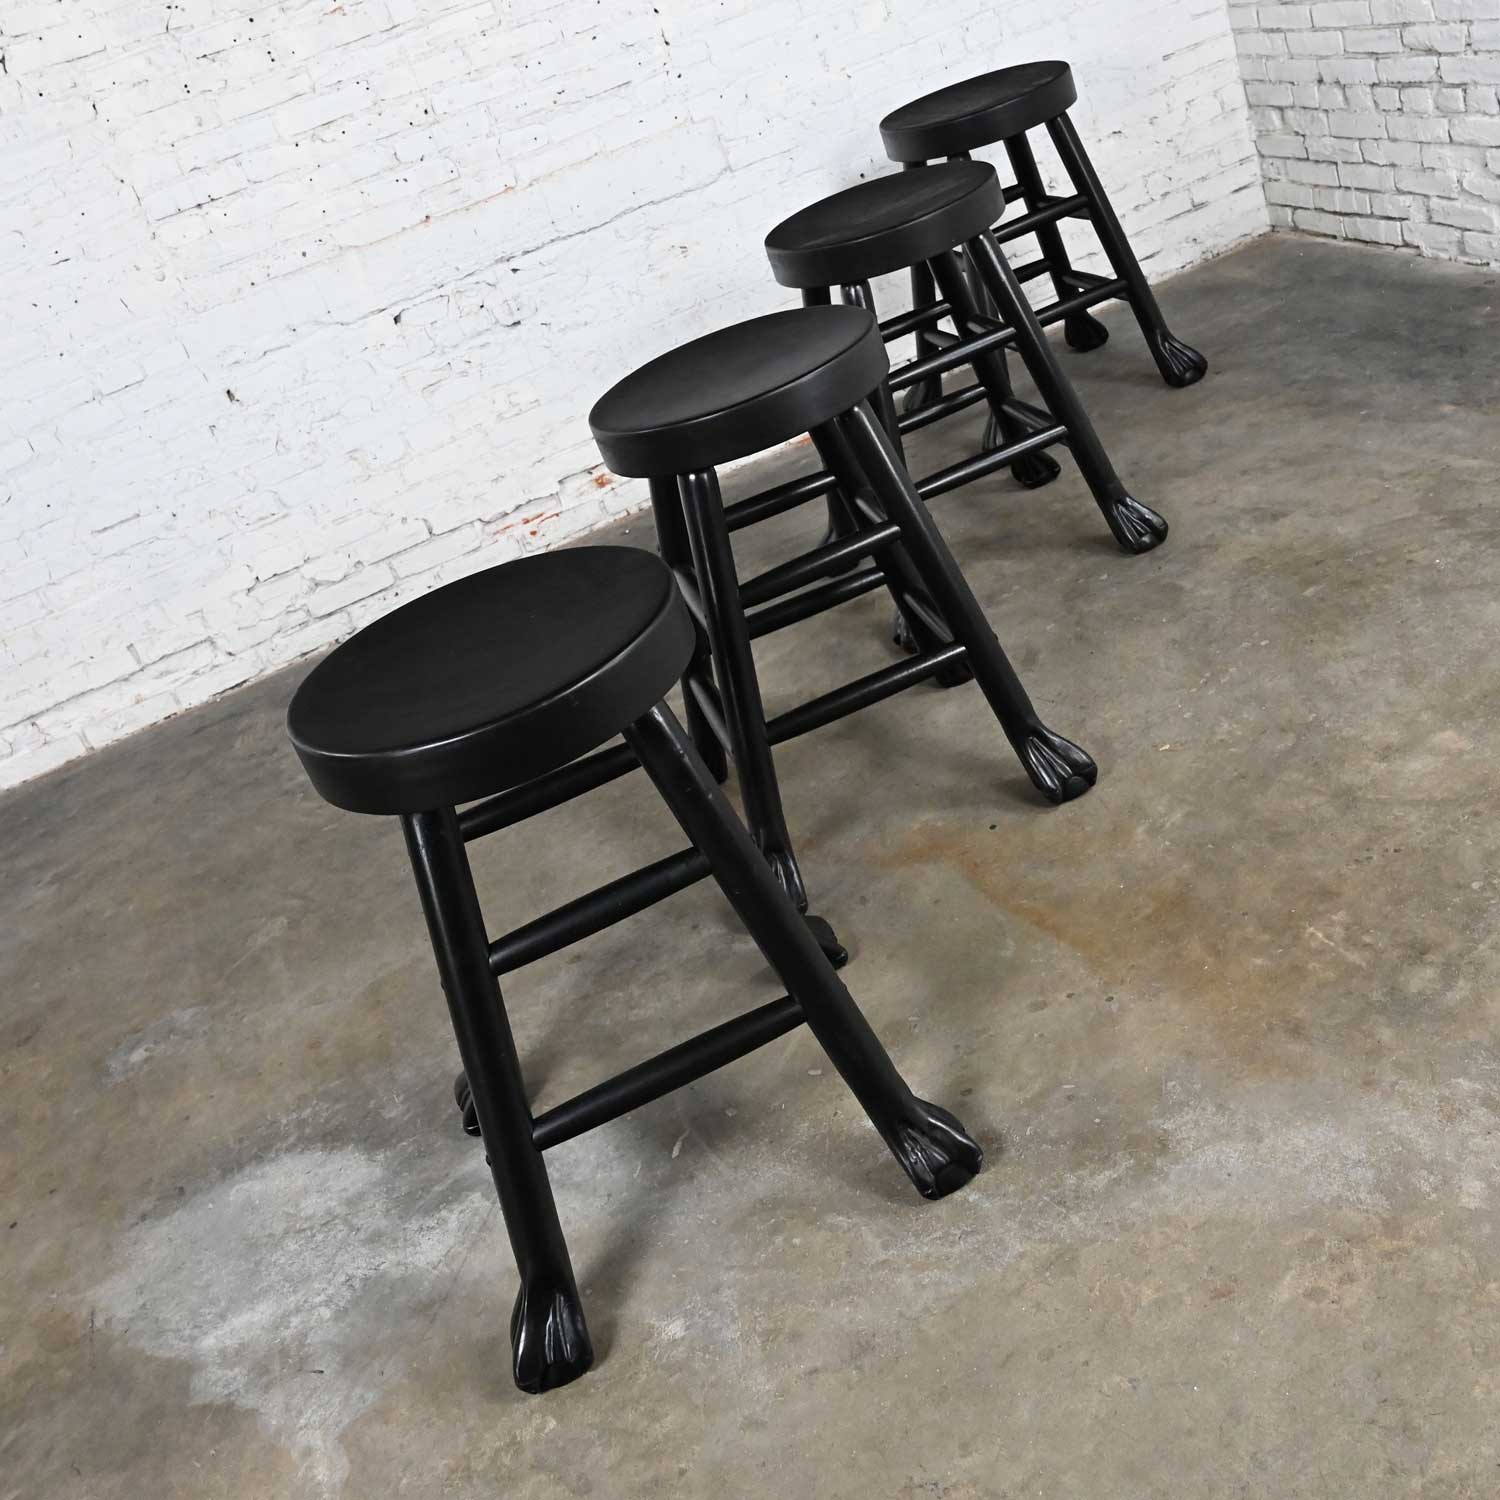 Vintage Rustic Blackened Solid Hardwood Chunky Claw Foot Barstools Set of 4